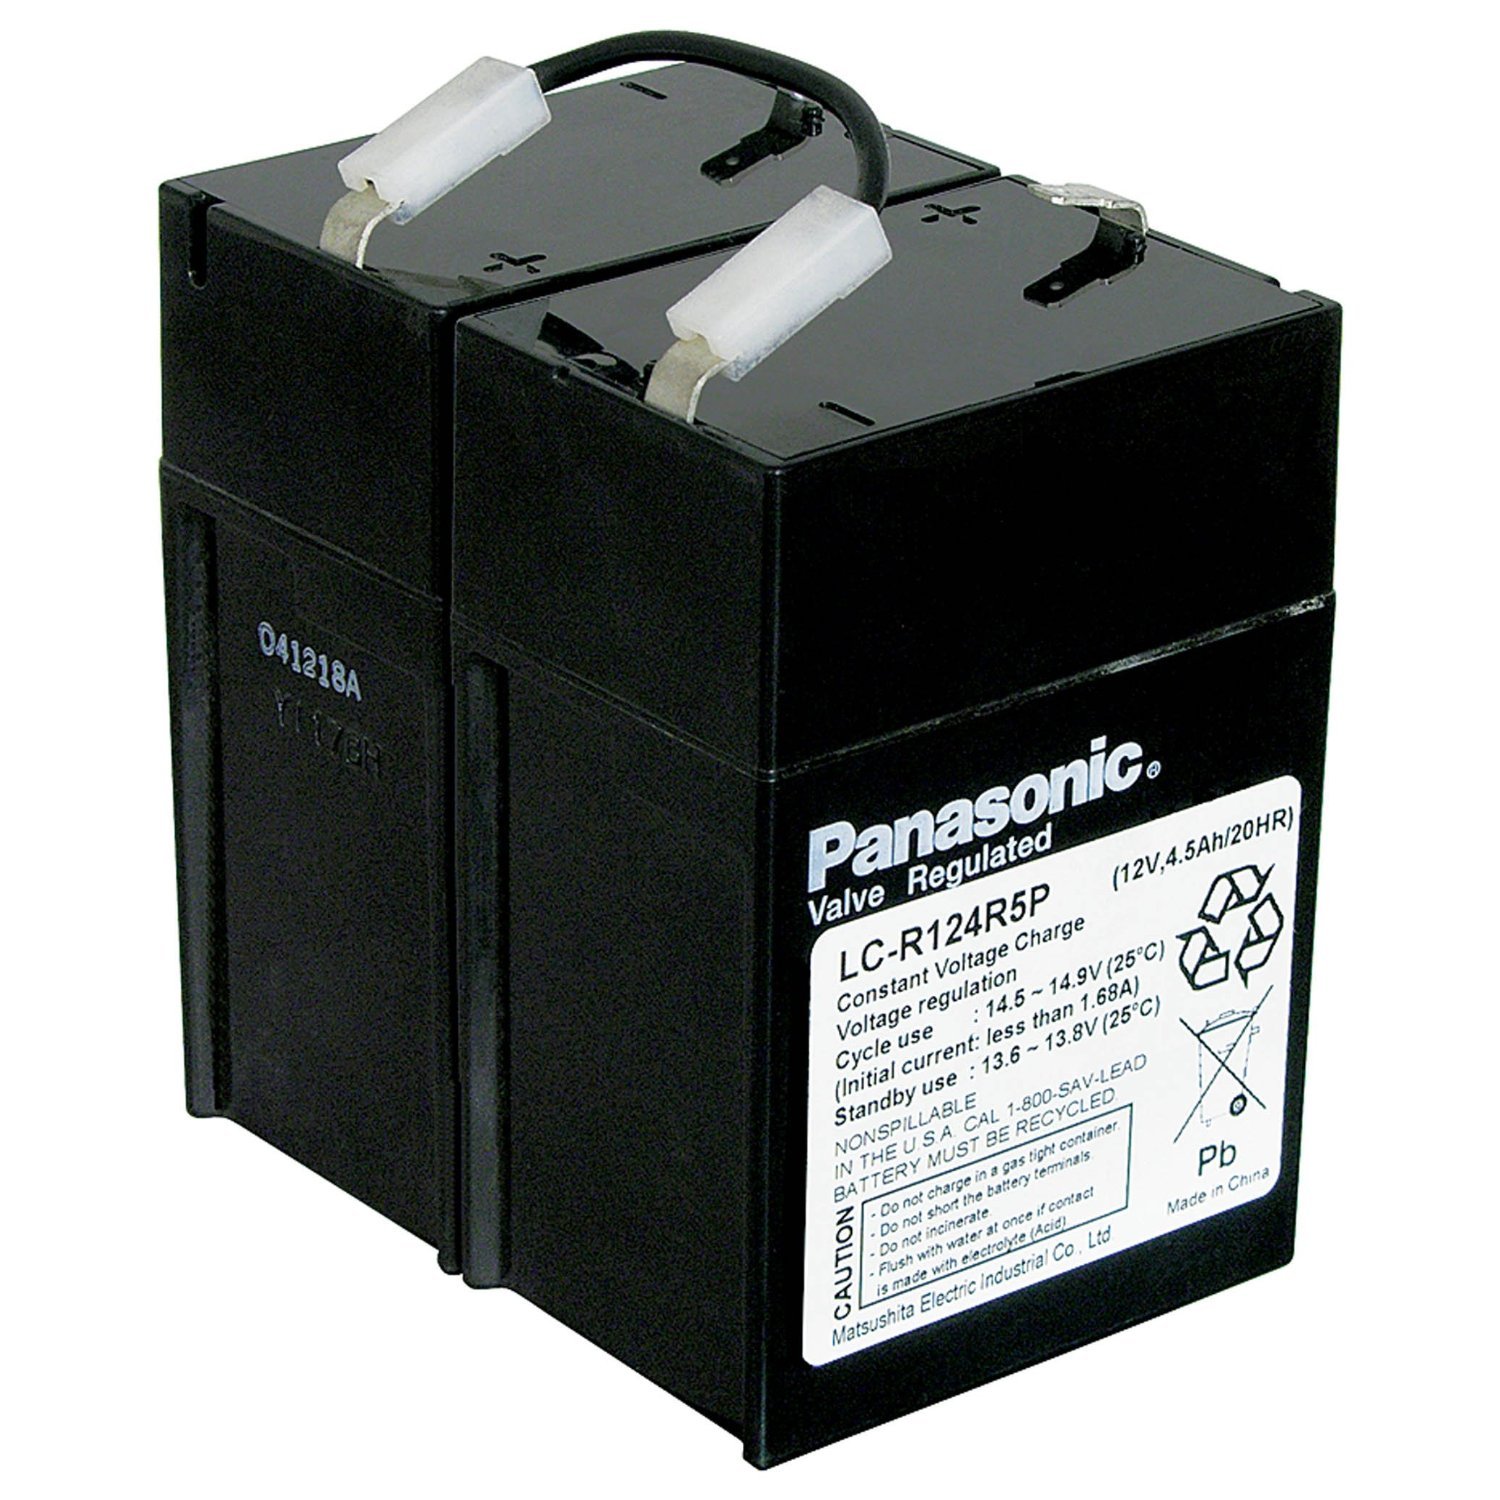 Цена аккумулятор panasonic для ибп Panasonic LC-R124R5P в Киеве